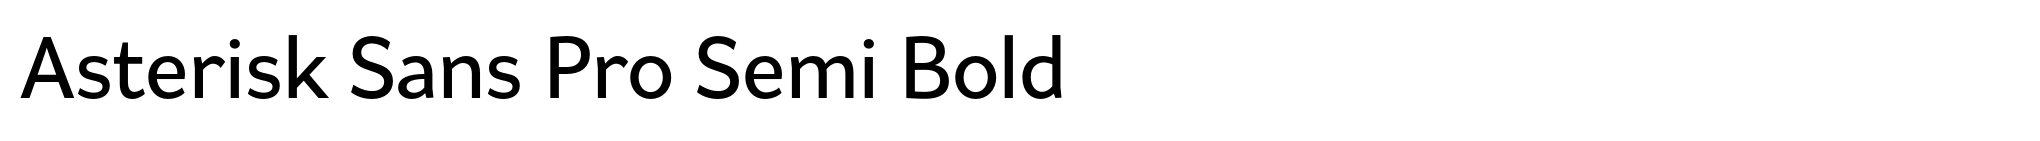 Asterisk Sans Pro Semi Bold image